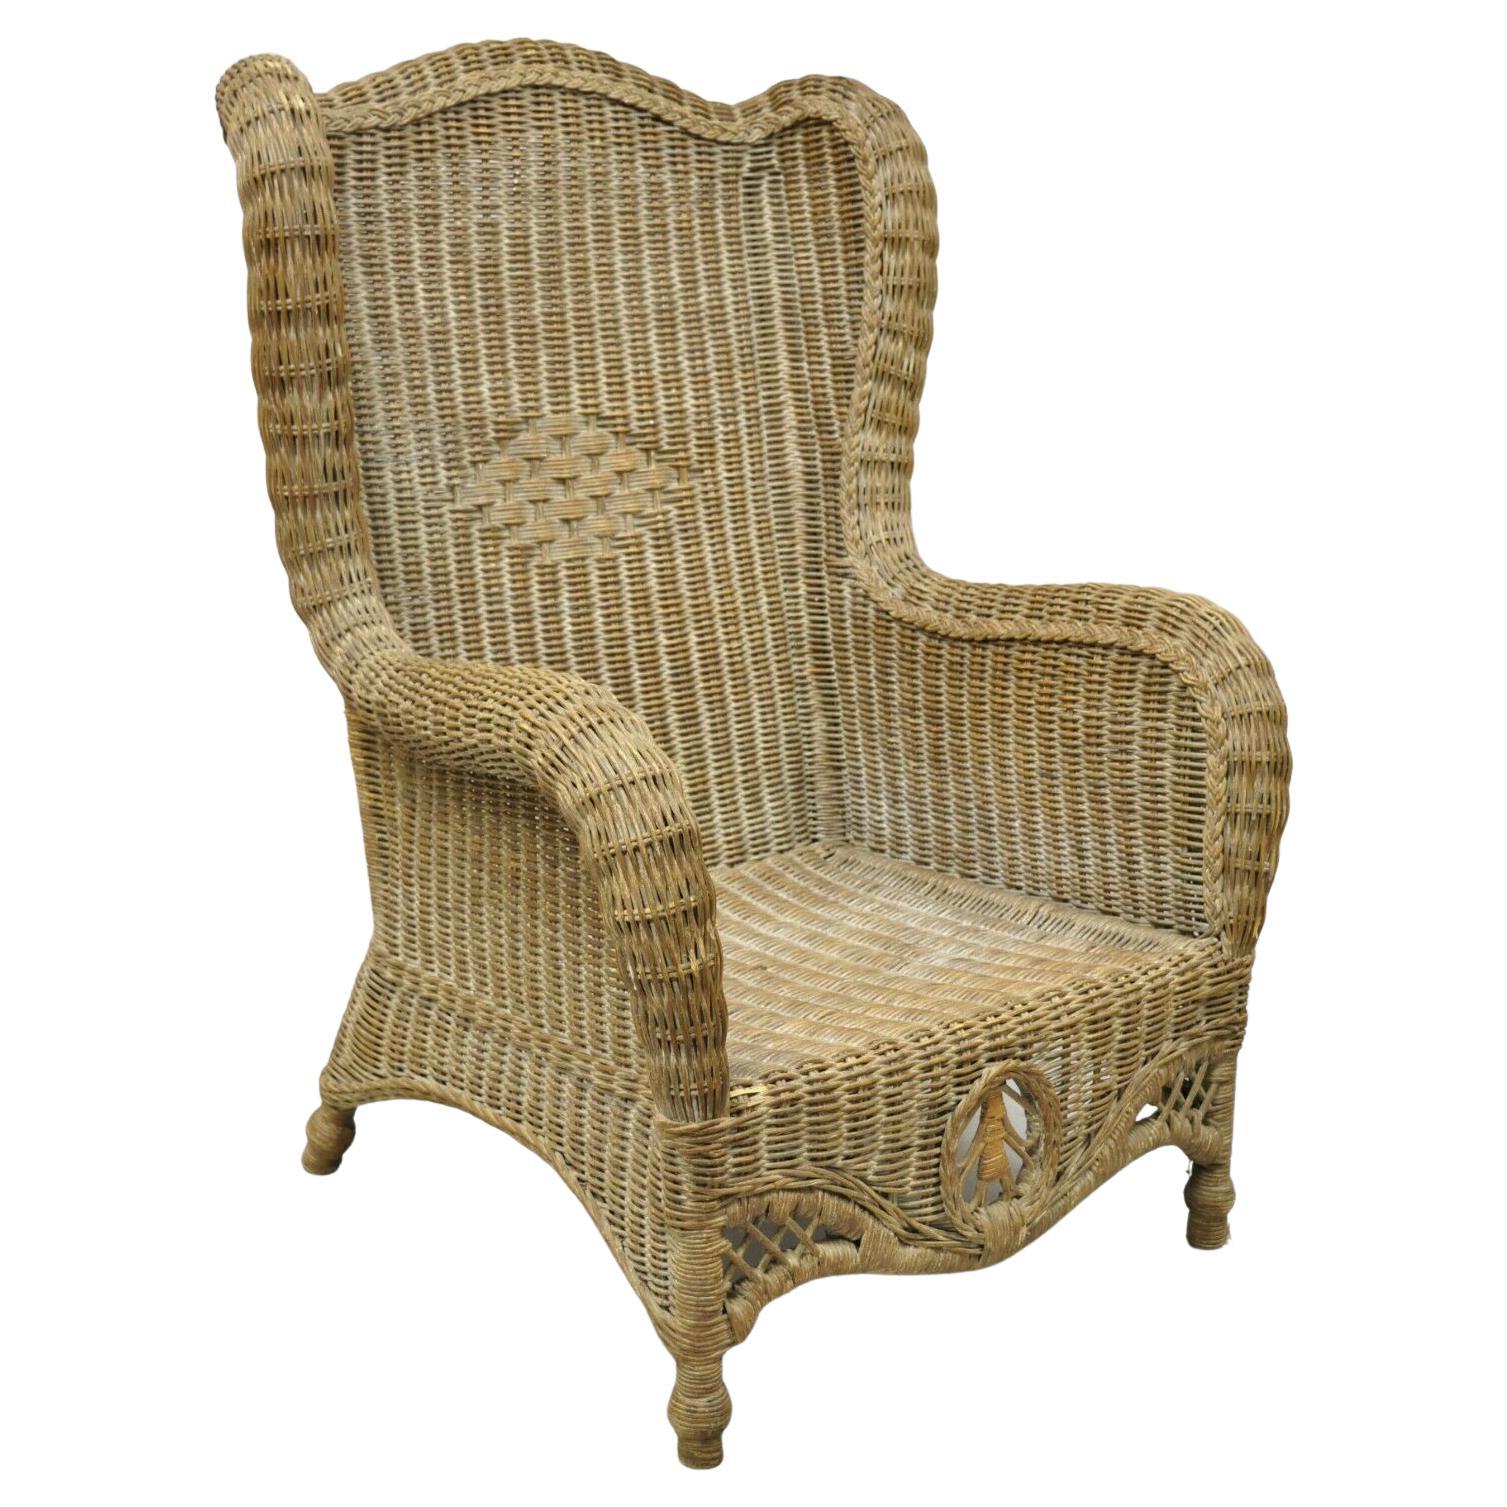 Große geflochtene Rattan Rattan viktorianischen Stil Wingback Lounge Sessel